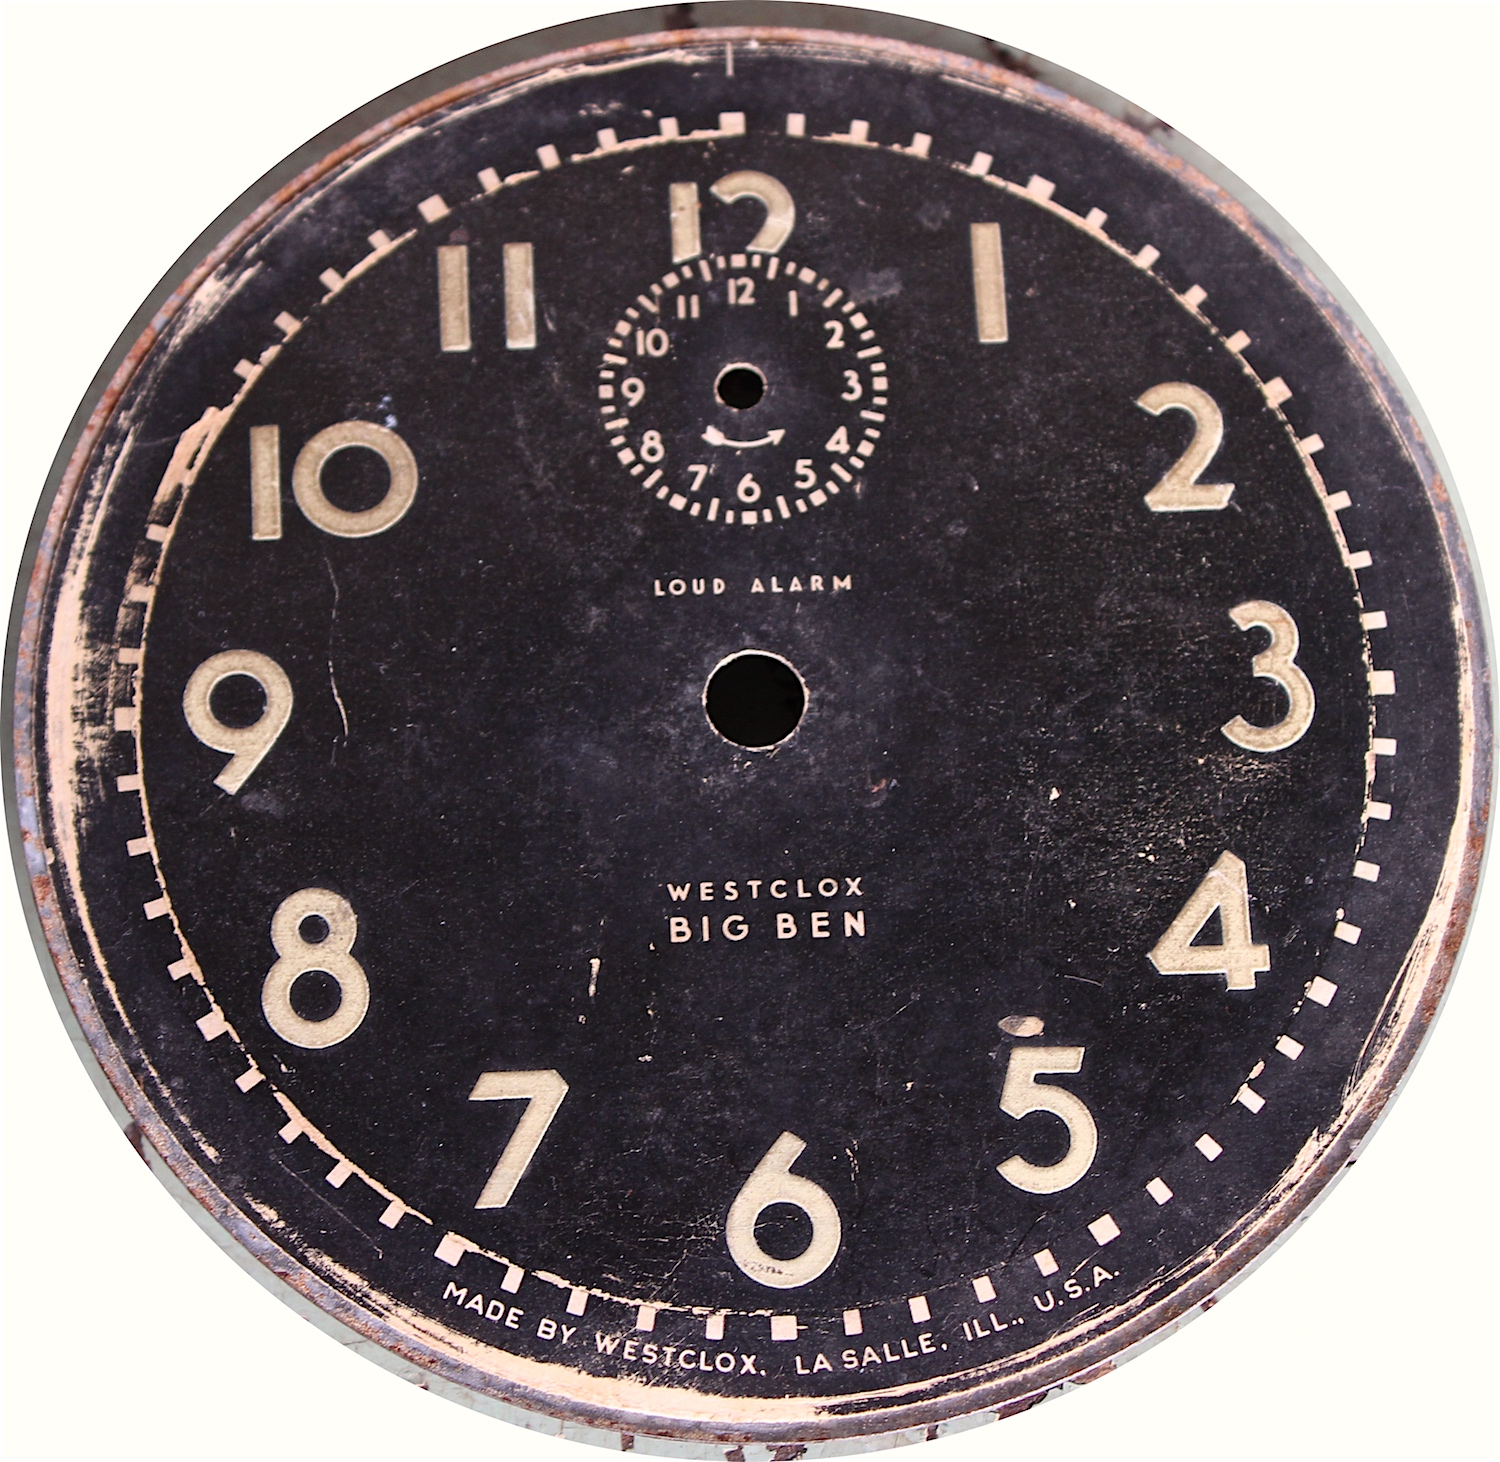 Western Clock MFG Co. (Westclox), est. 1888 - Made-in-Chicago Museum